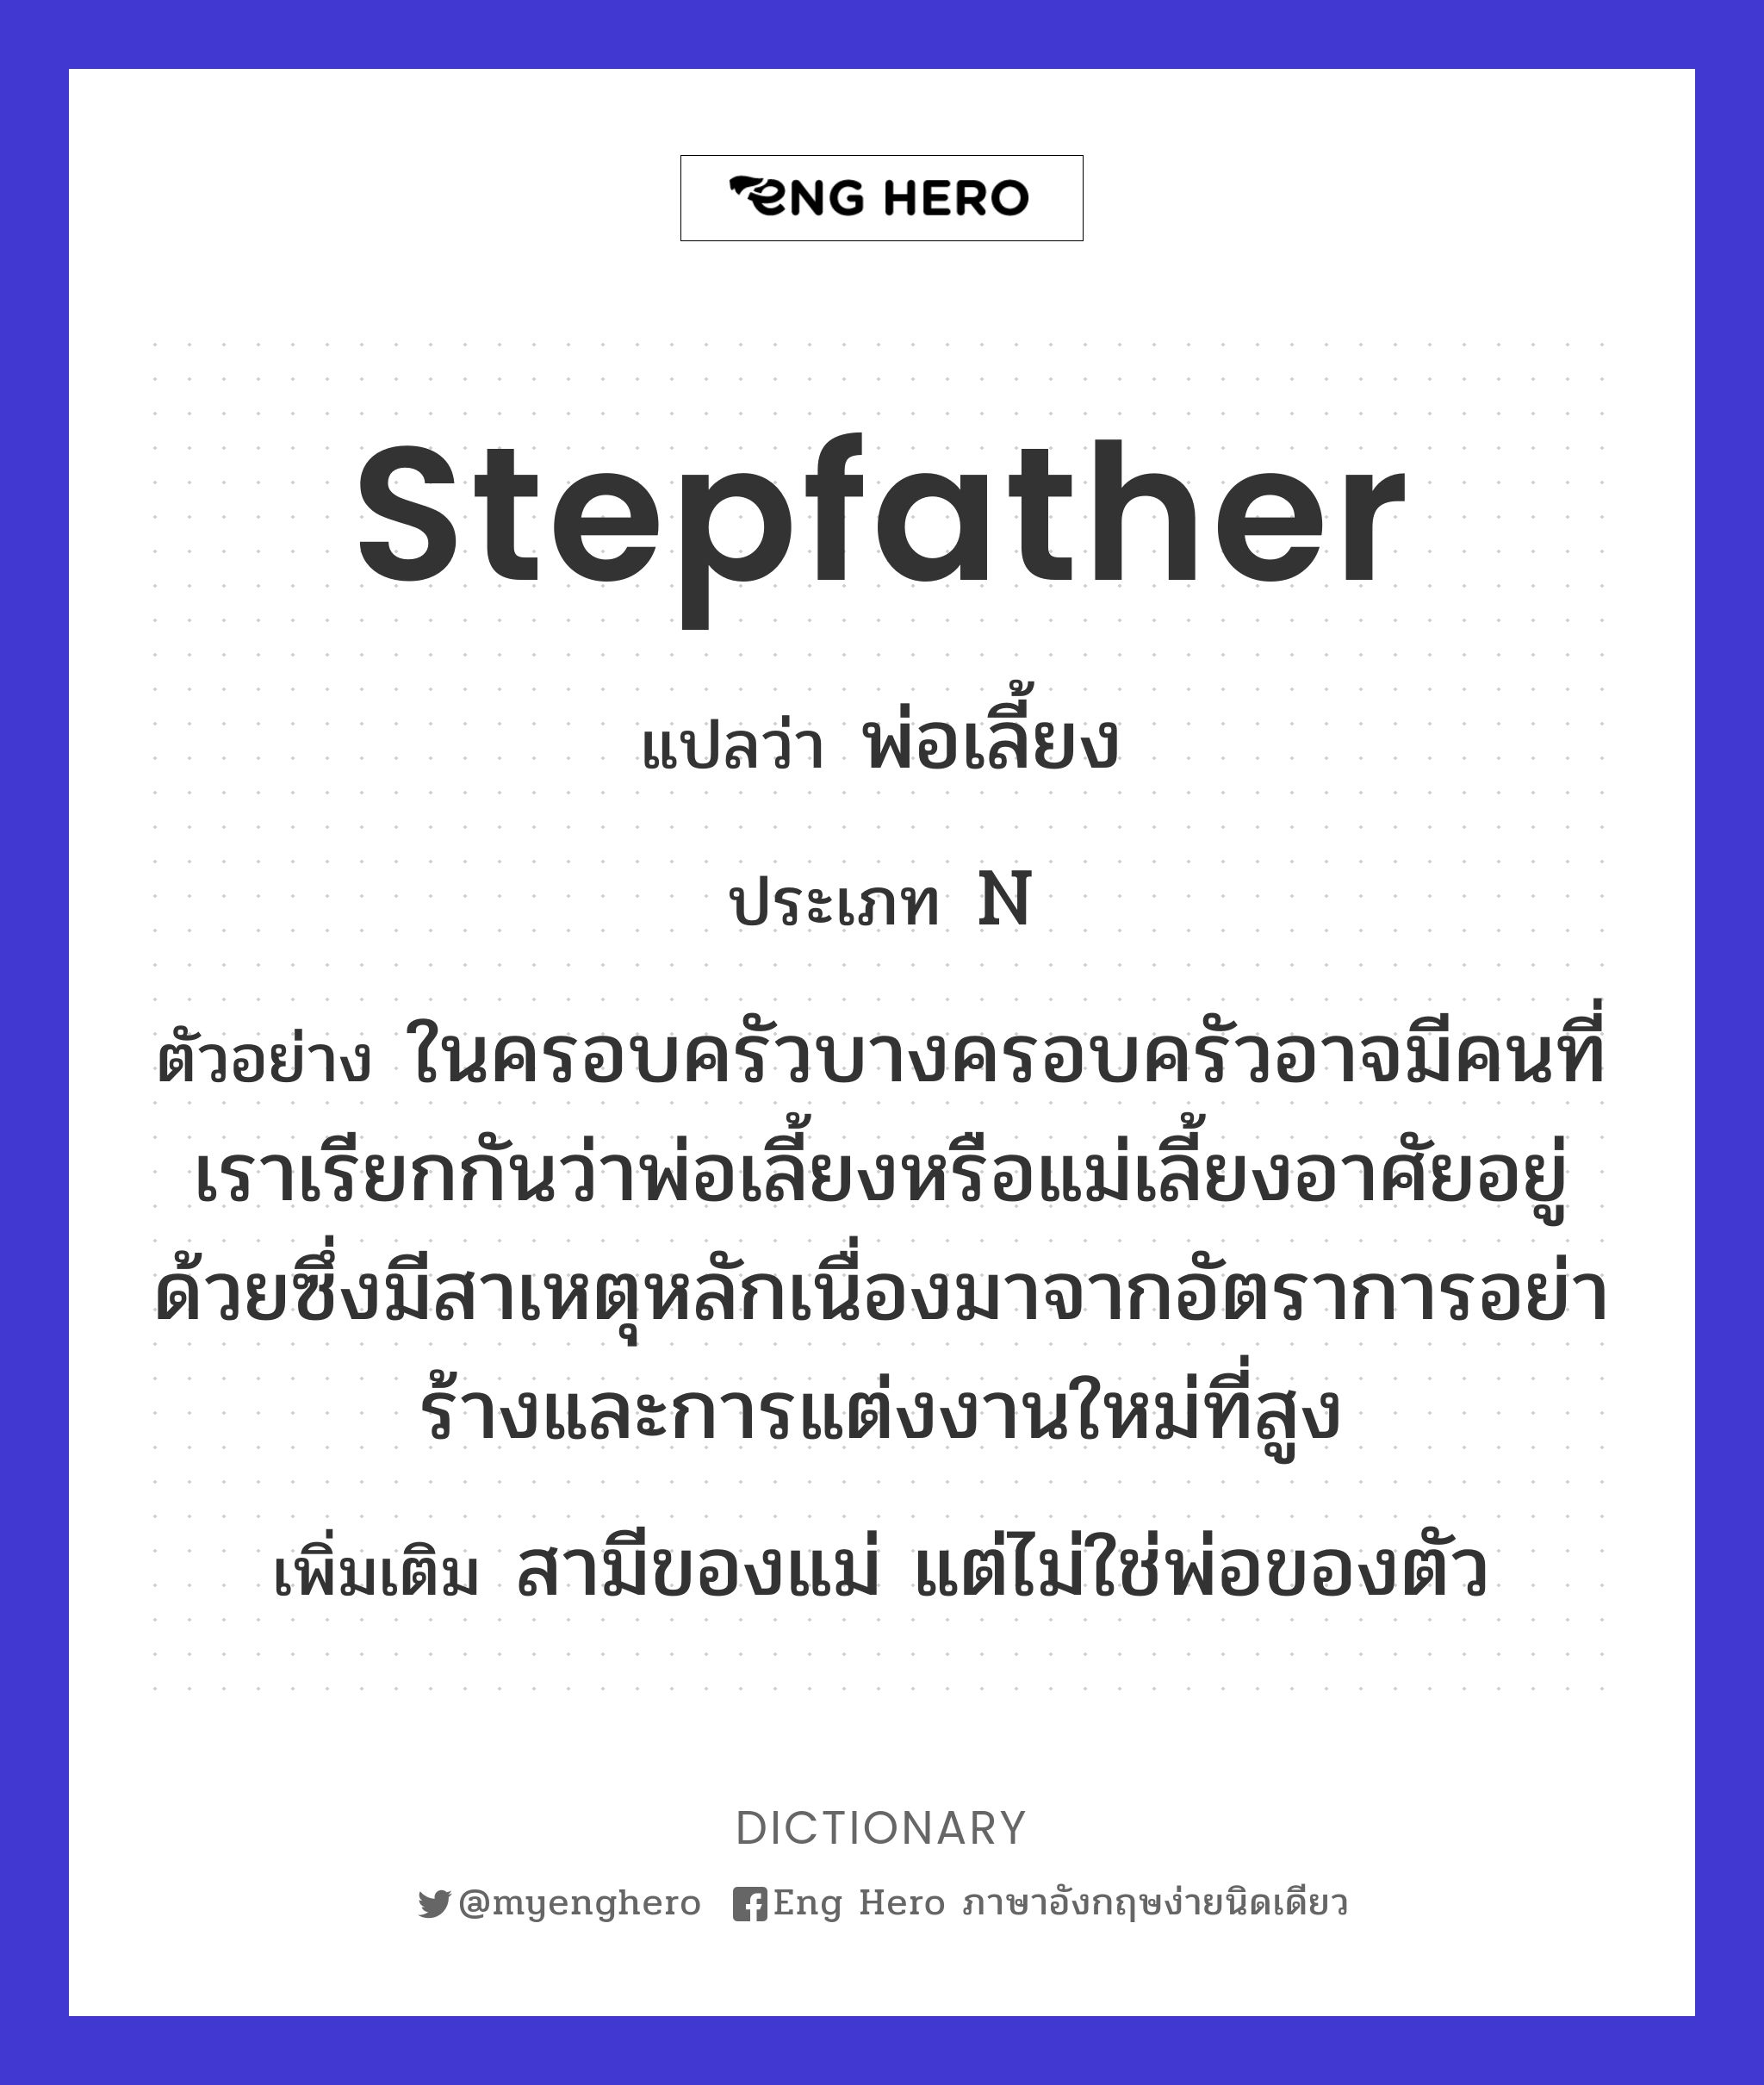 stepfather